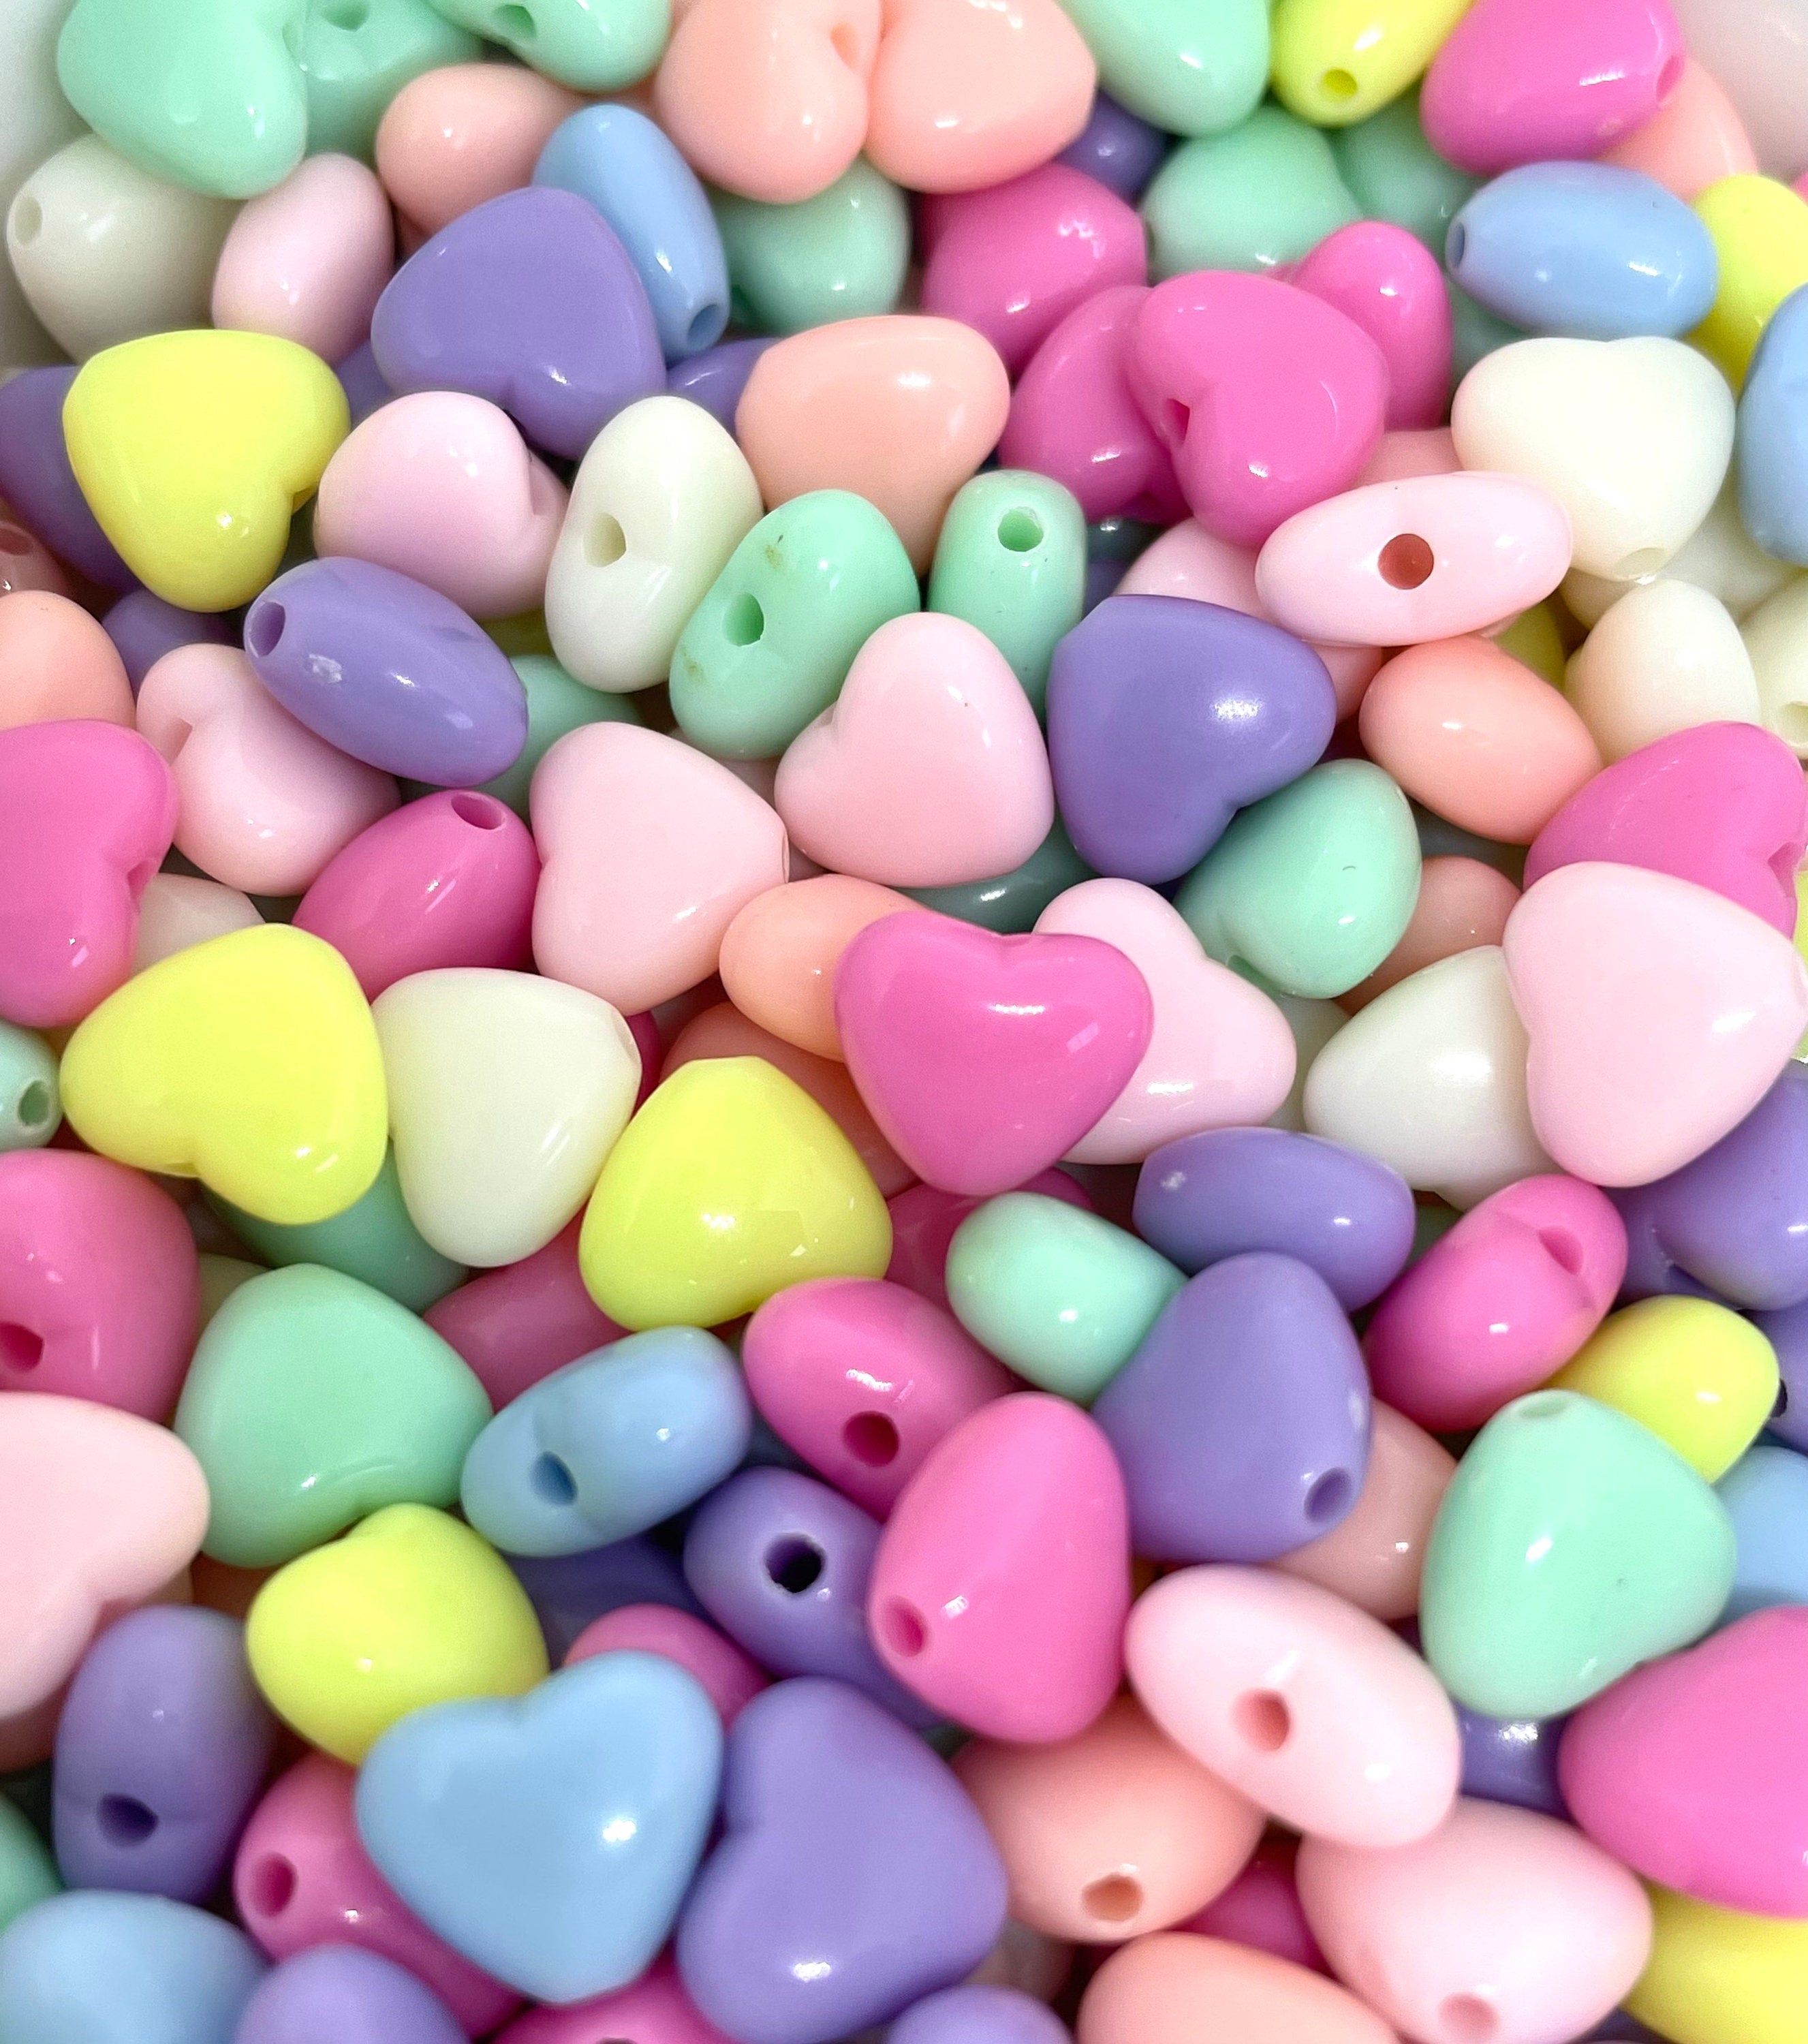 Pastel Heart Beads (12mm x 11mm / Rainbow Color / 30pcs) Decora Acrylic  Bead Loose Plastic Bead Sweet Colorful Fairy Kei Jewellery DIY F273